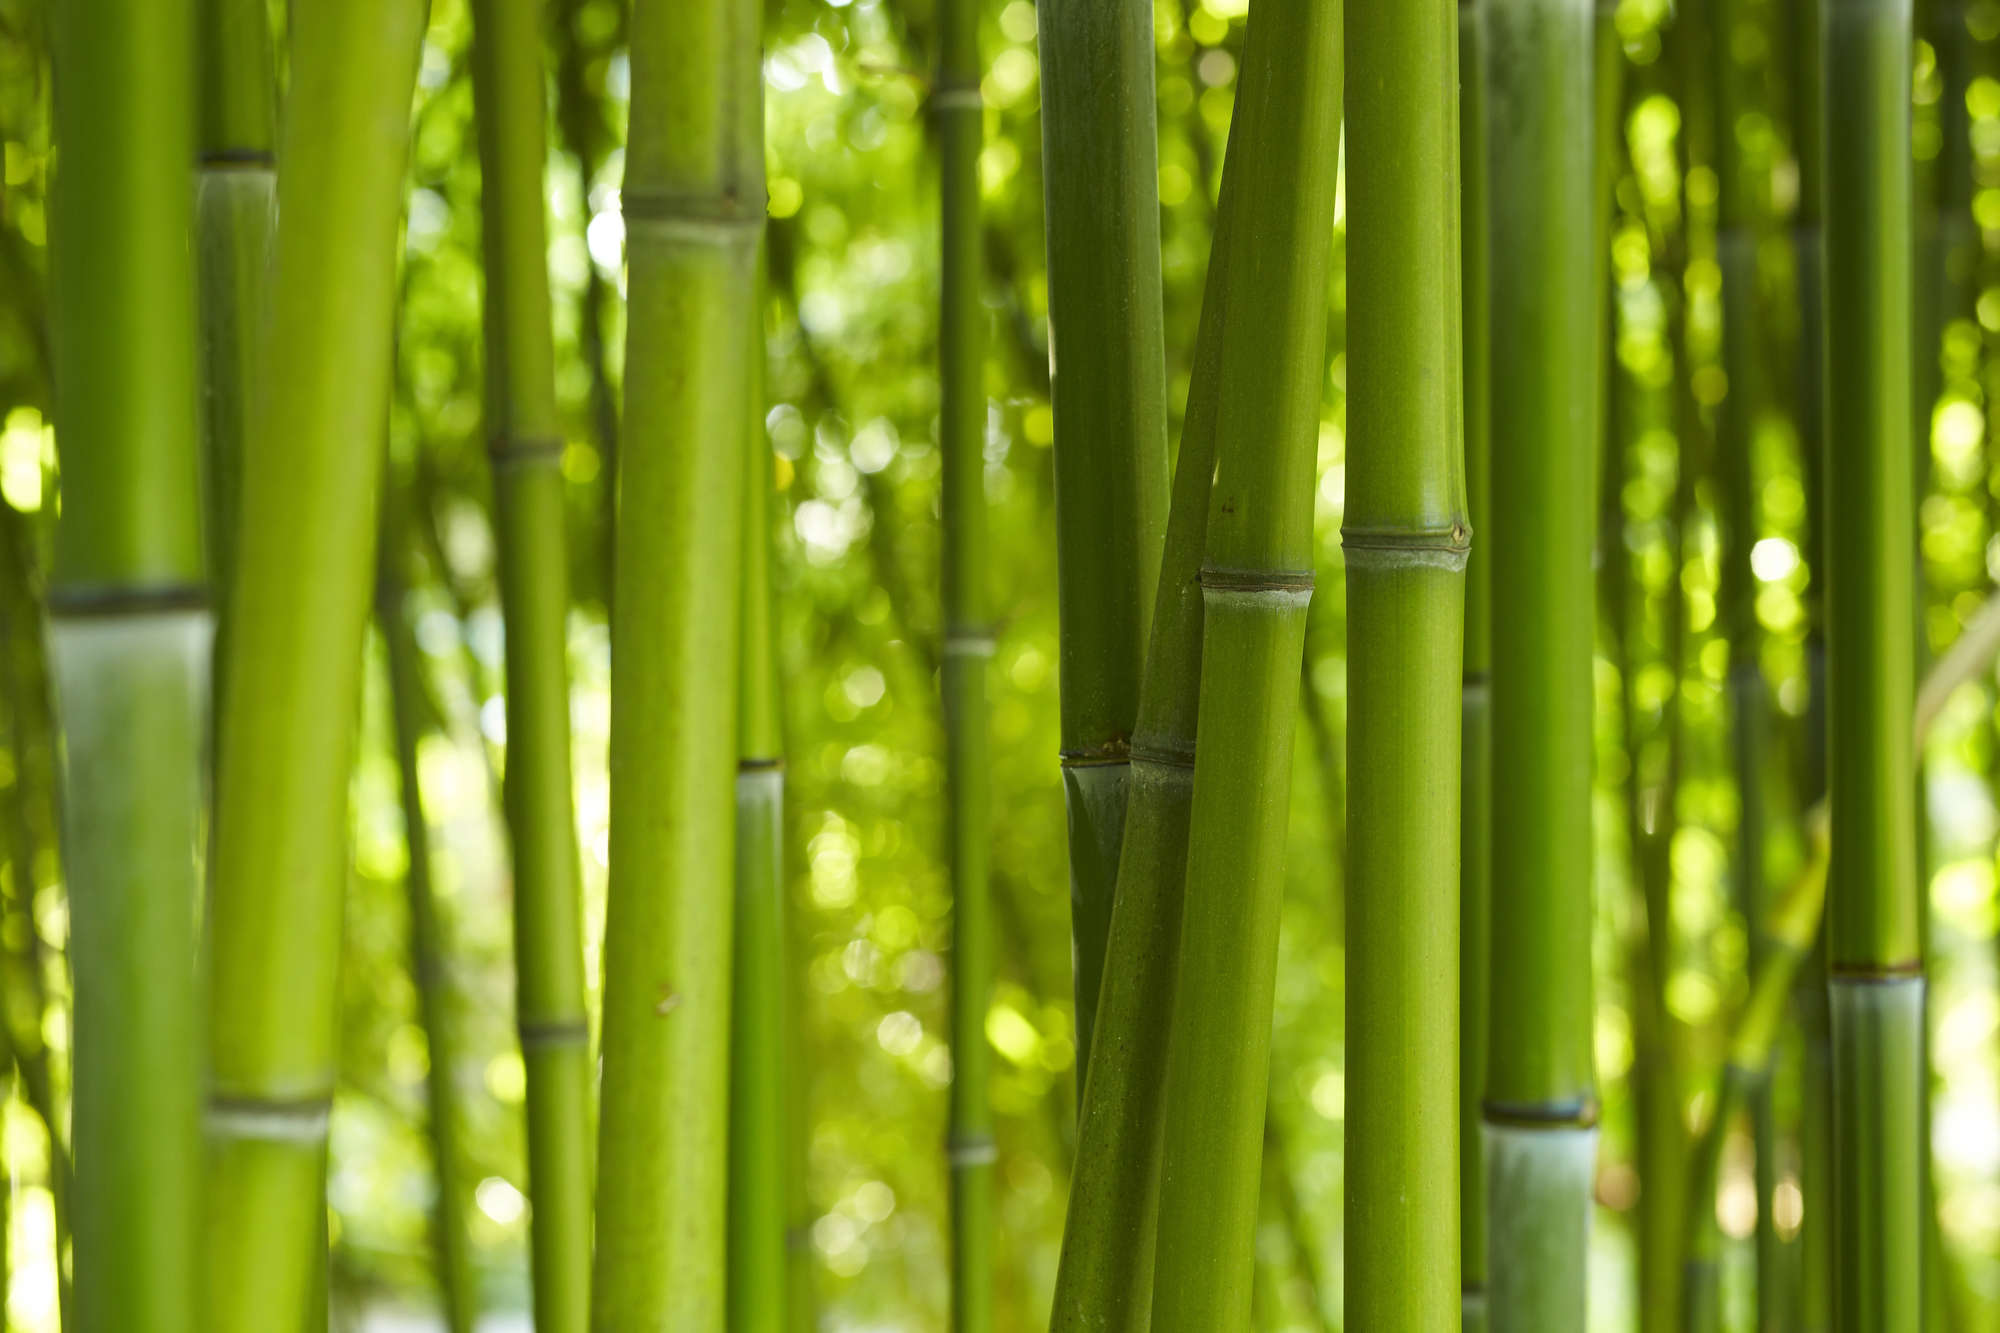             Natur Fototapete Bambus Nahaufnahme auf Strukturvlies
        